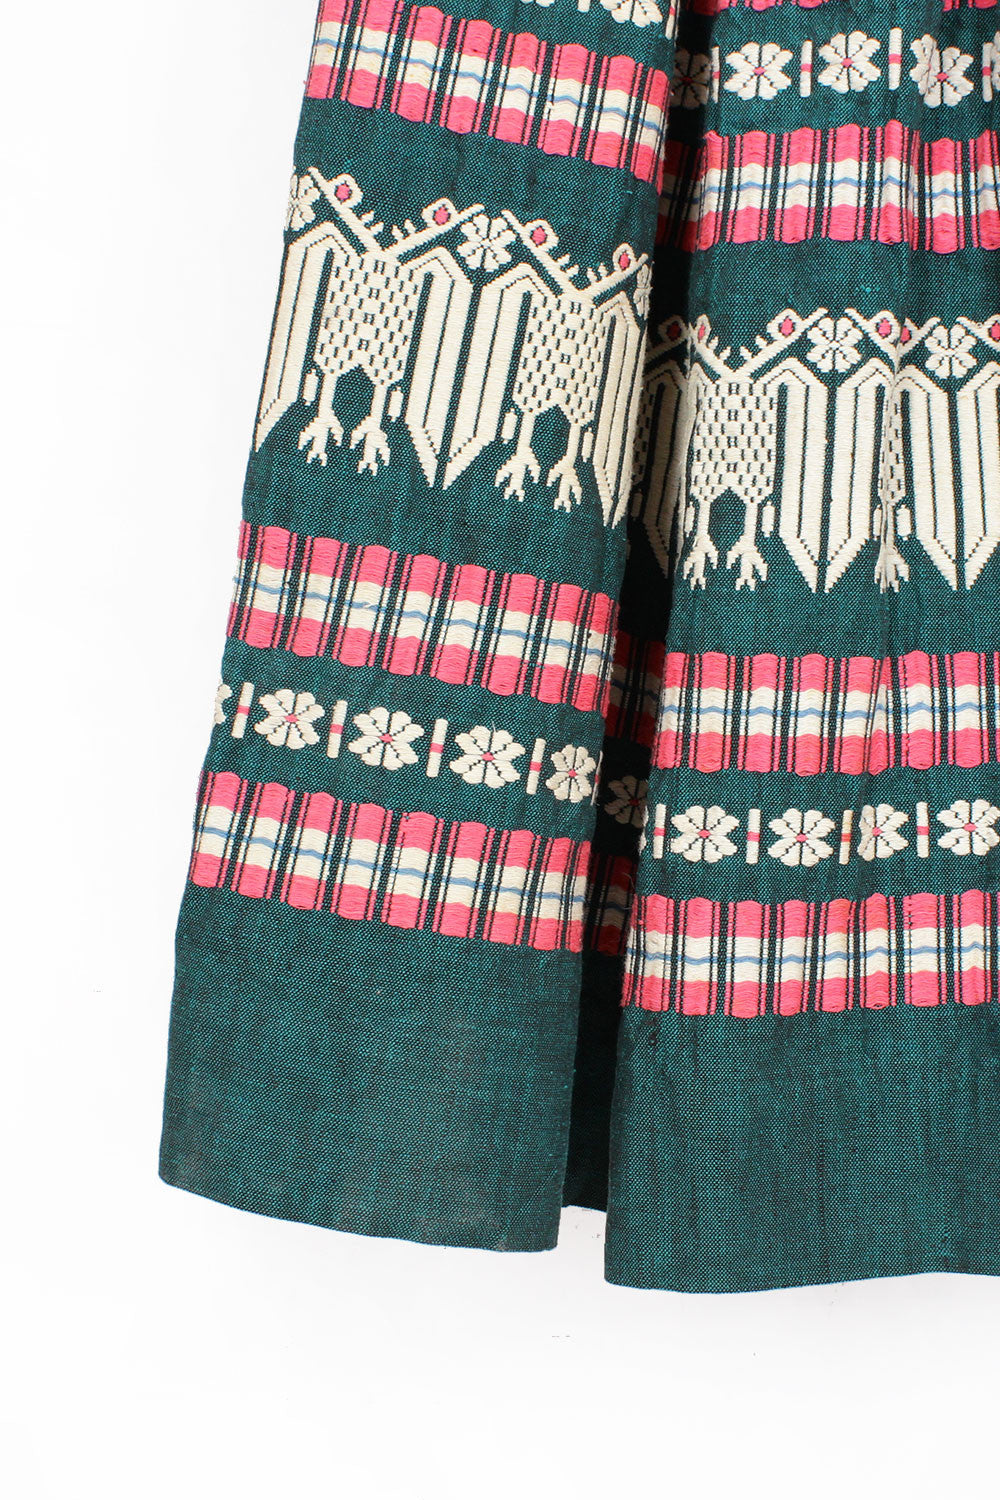 Guatemalan Embroidered Skirt XS